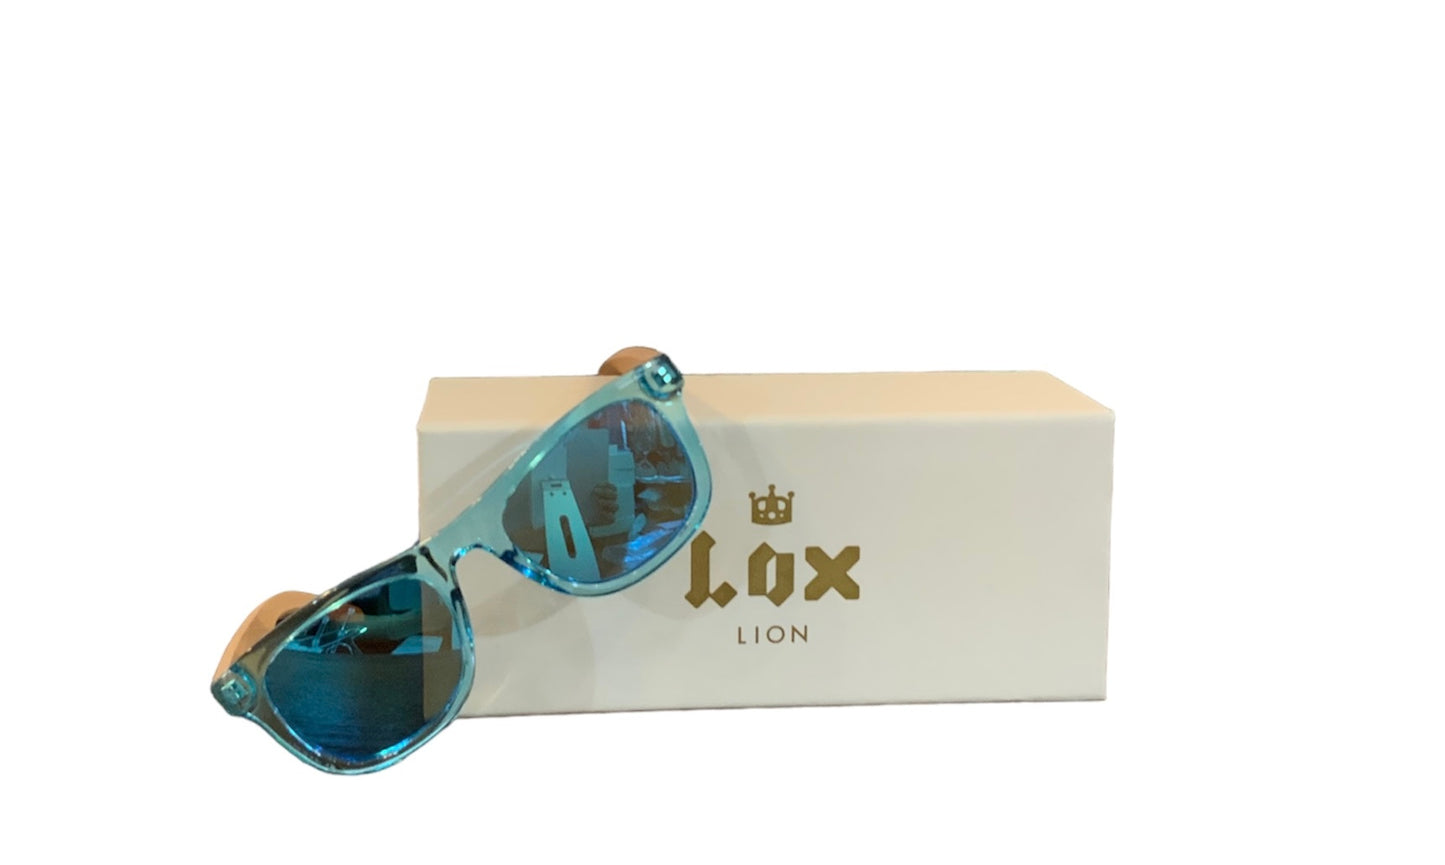 Lox Lion Sunglasses